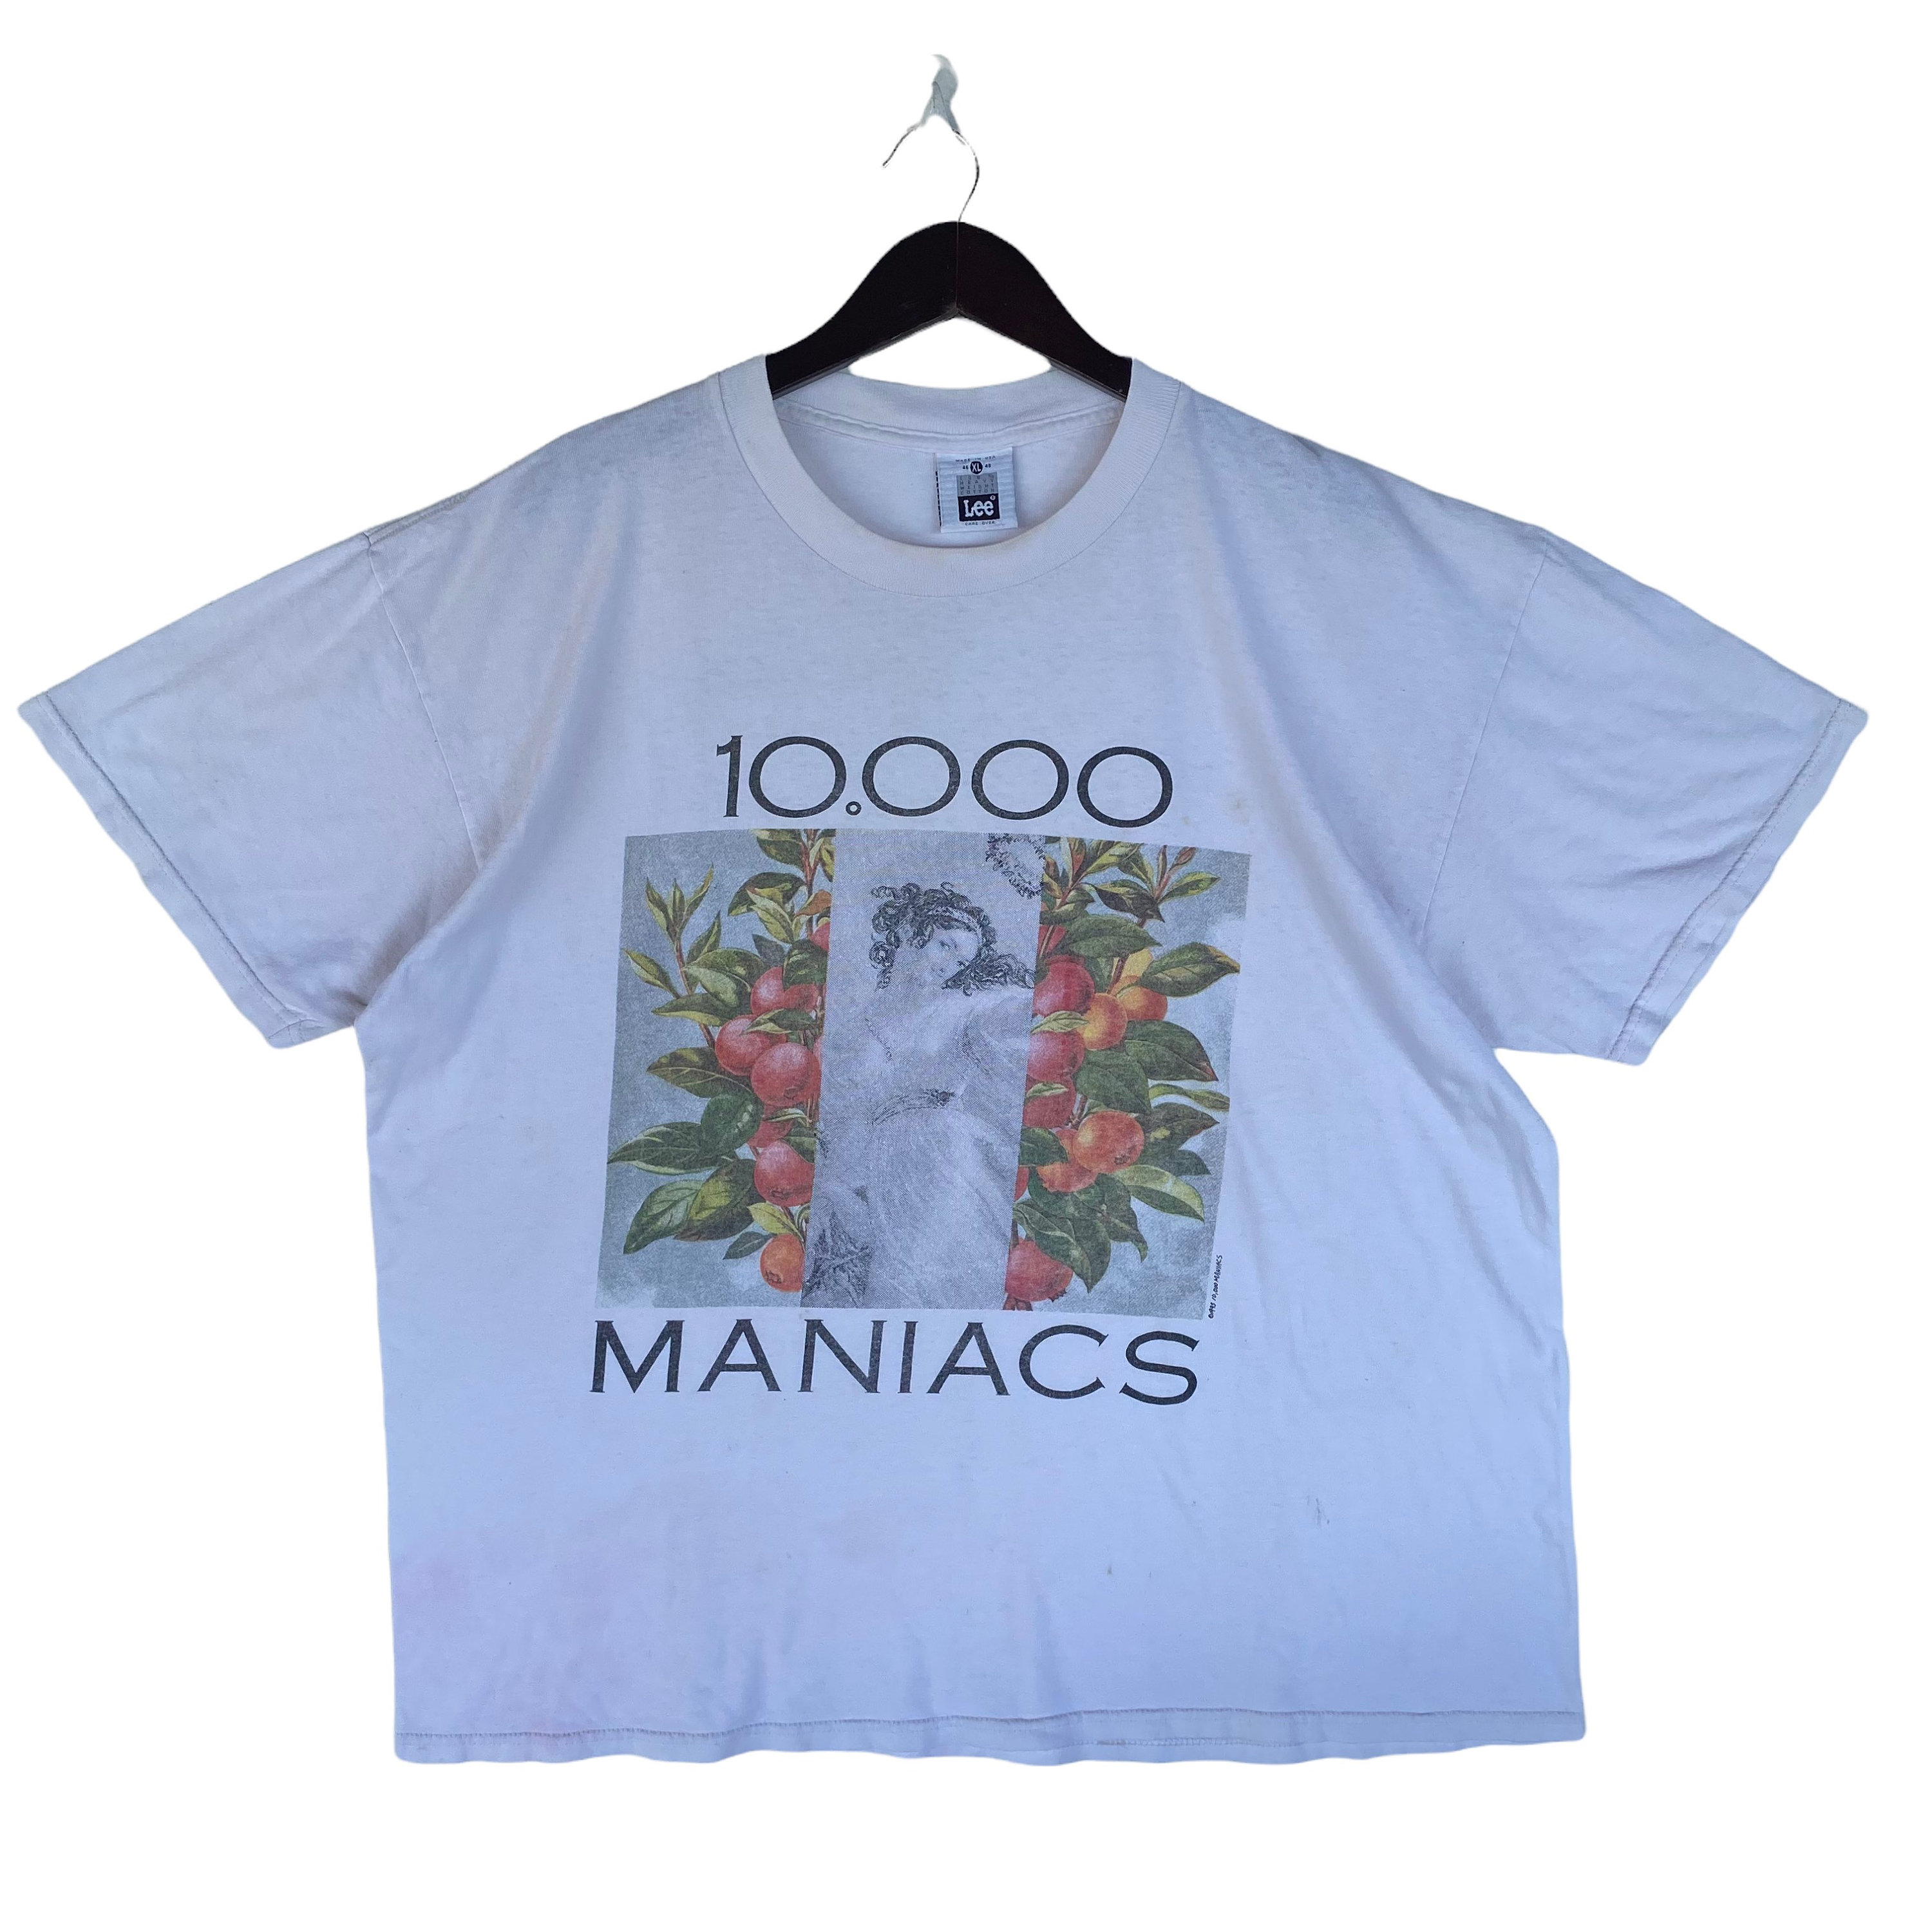 VINTAGE 90s 10,000 MANIACS Alternative rock band rare tee shirt